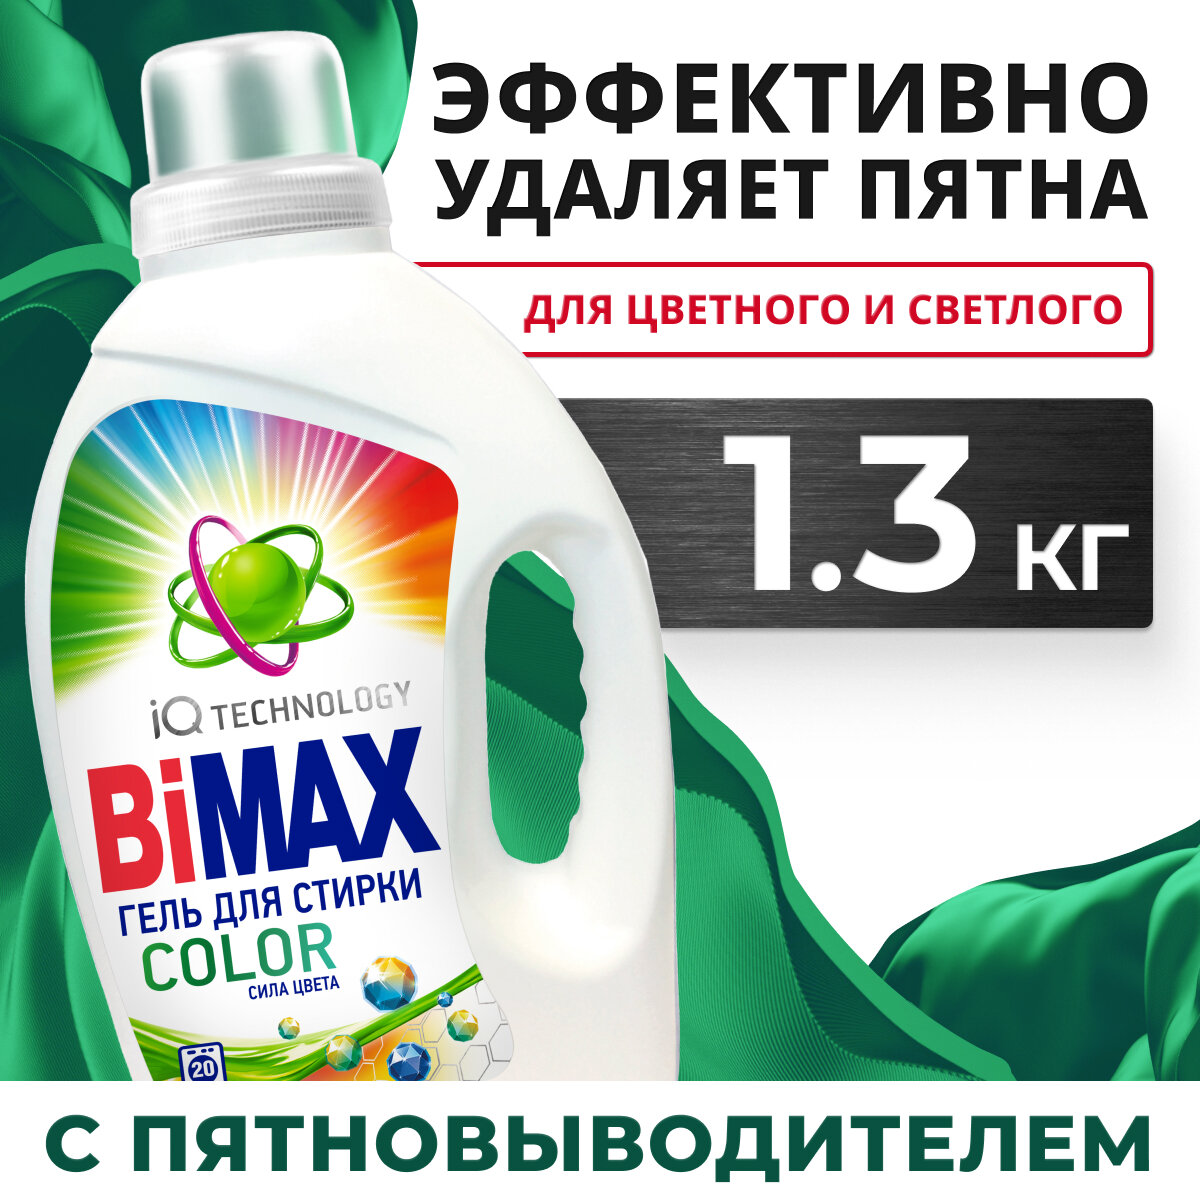    Bimax Color  1300 